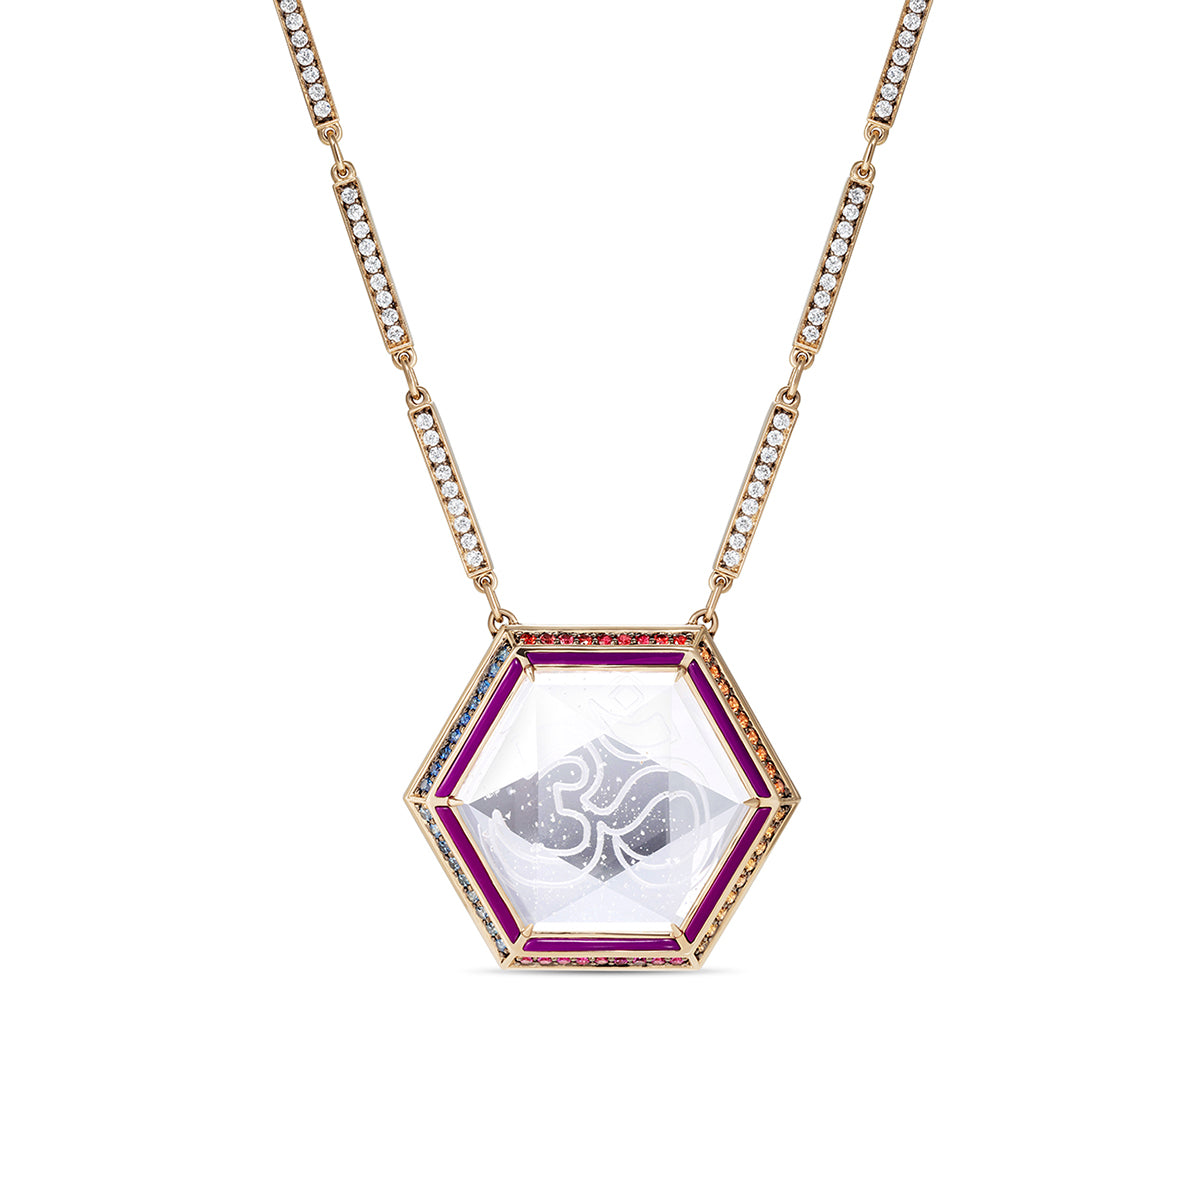 Noor Fares bespoke rock crystal pendant with diamond